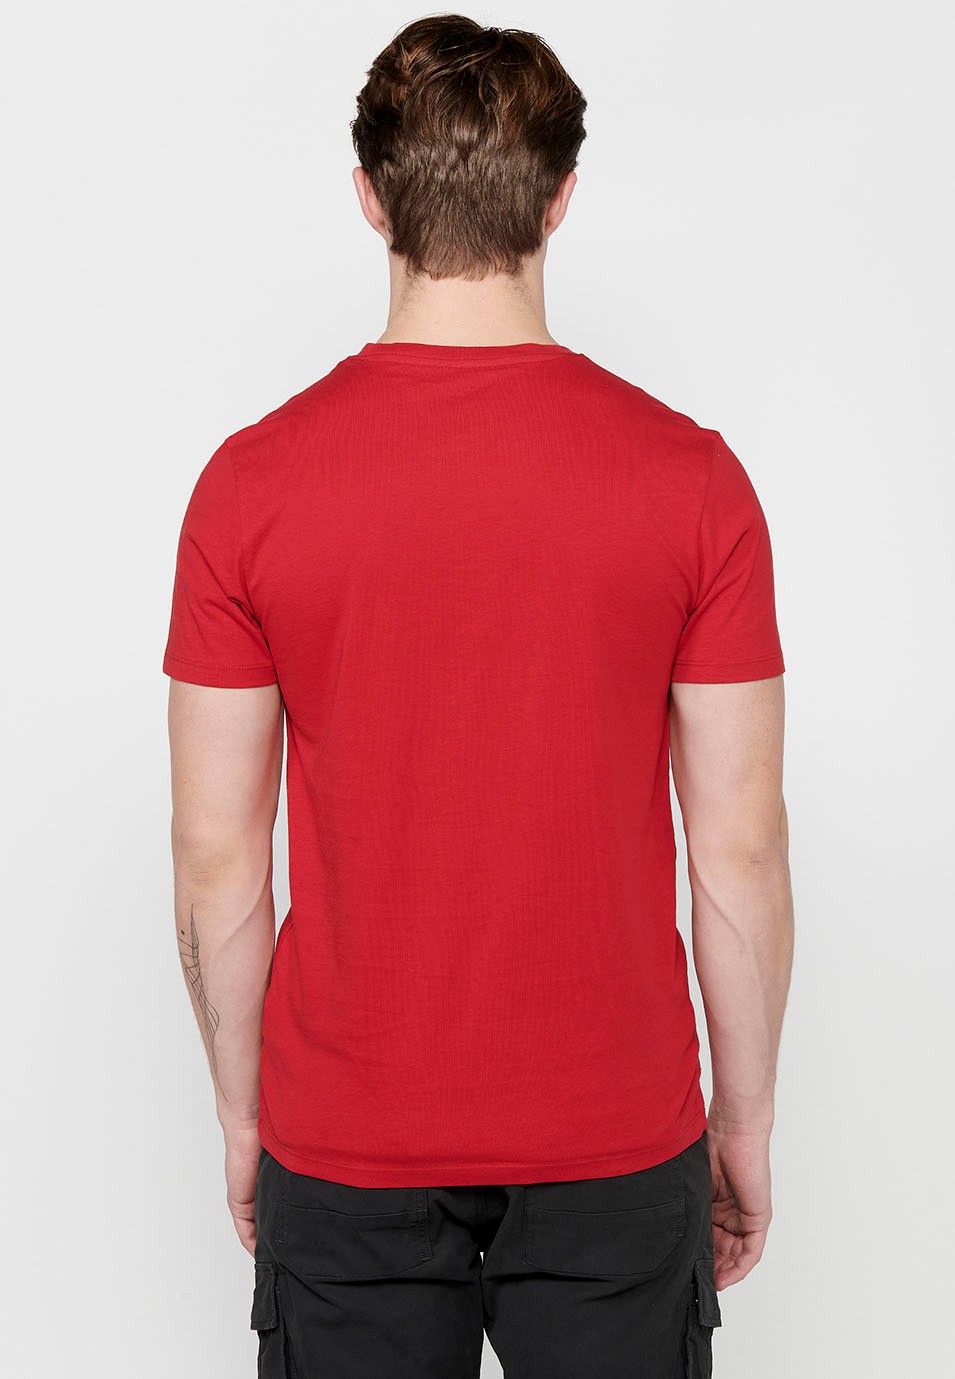 Men's Red Color Round Neck Cotton Short Sleeve T-shirt 1